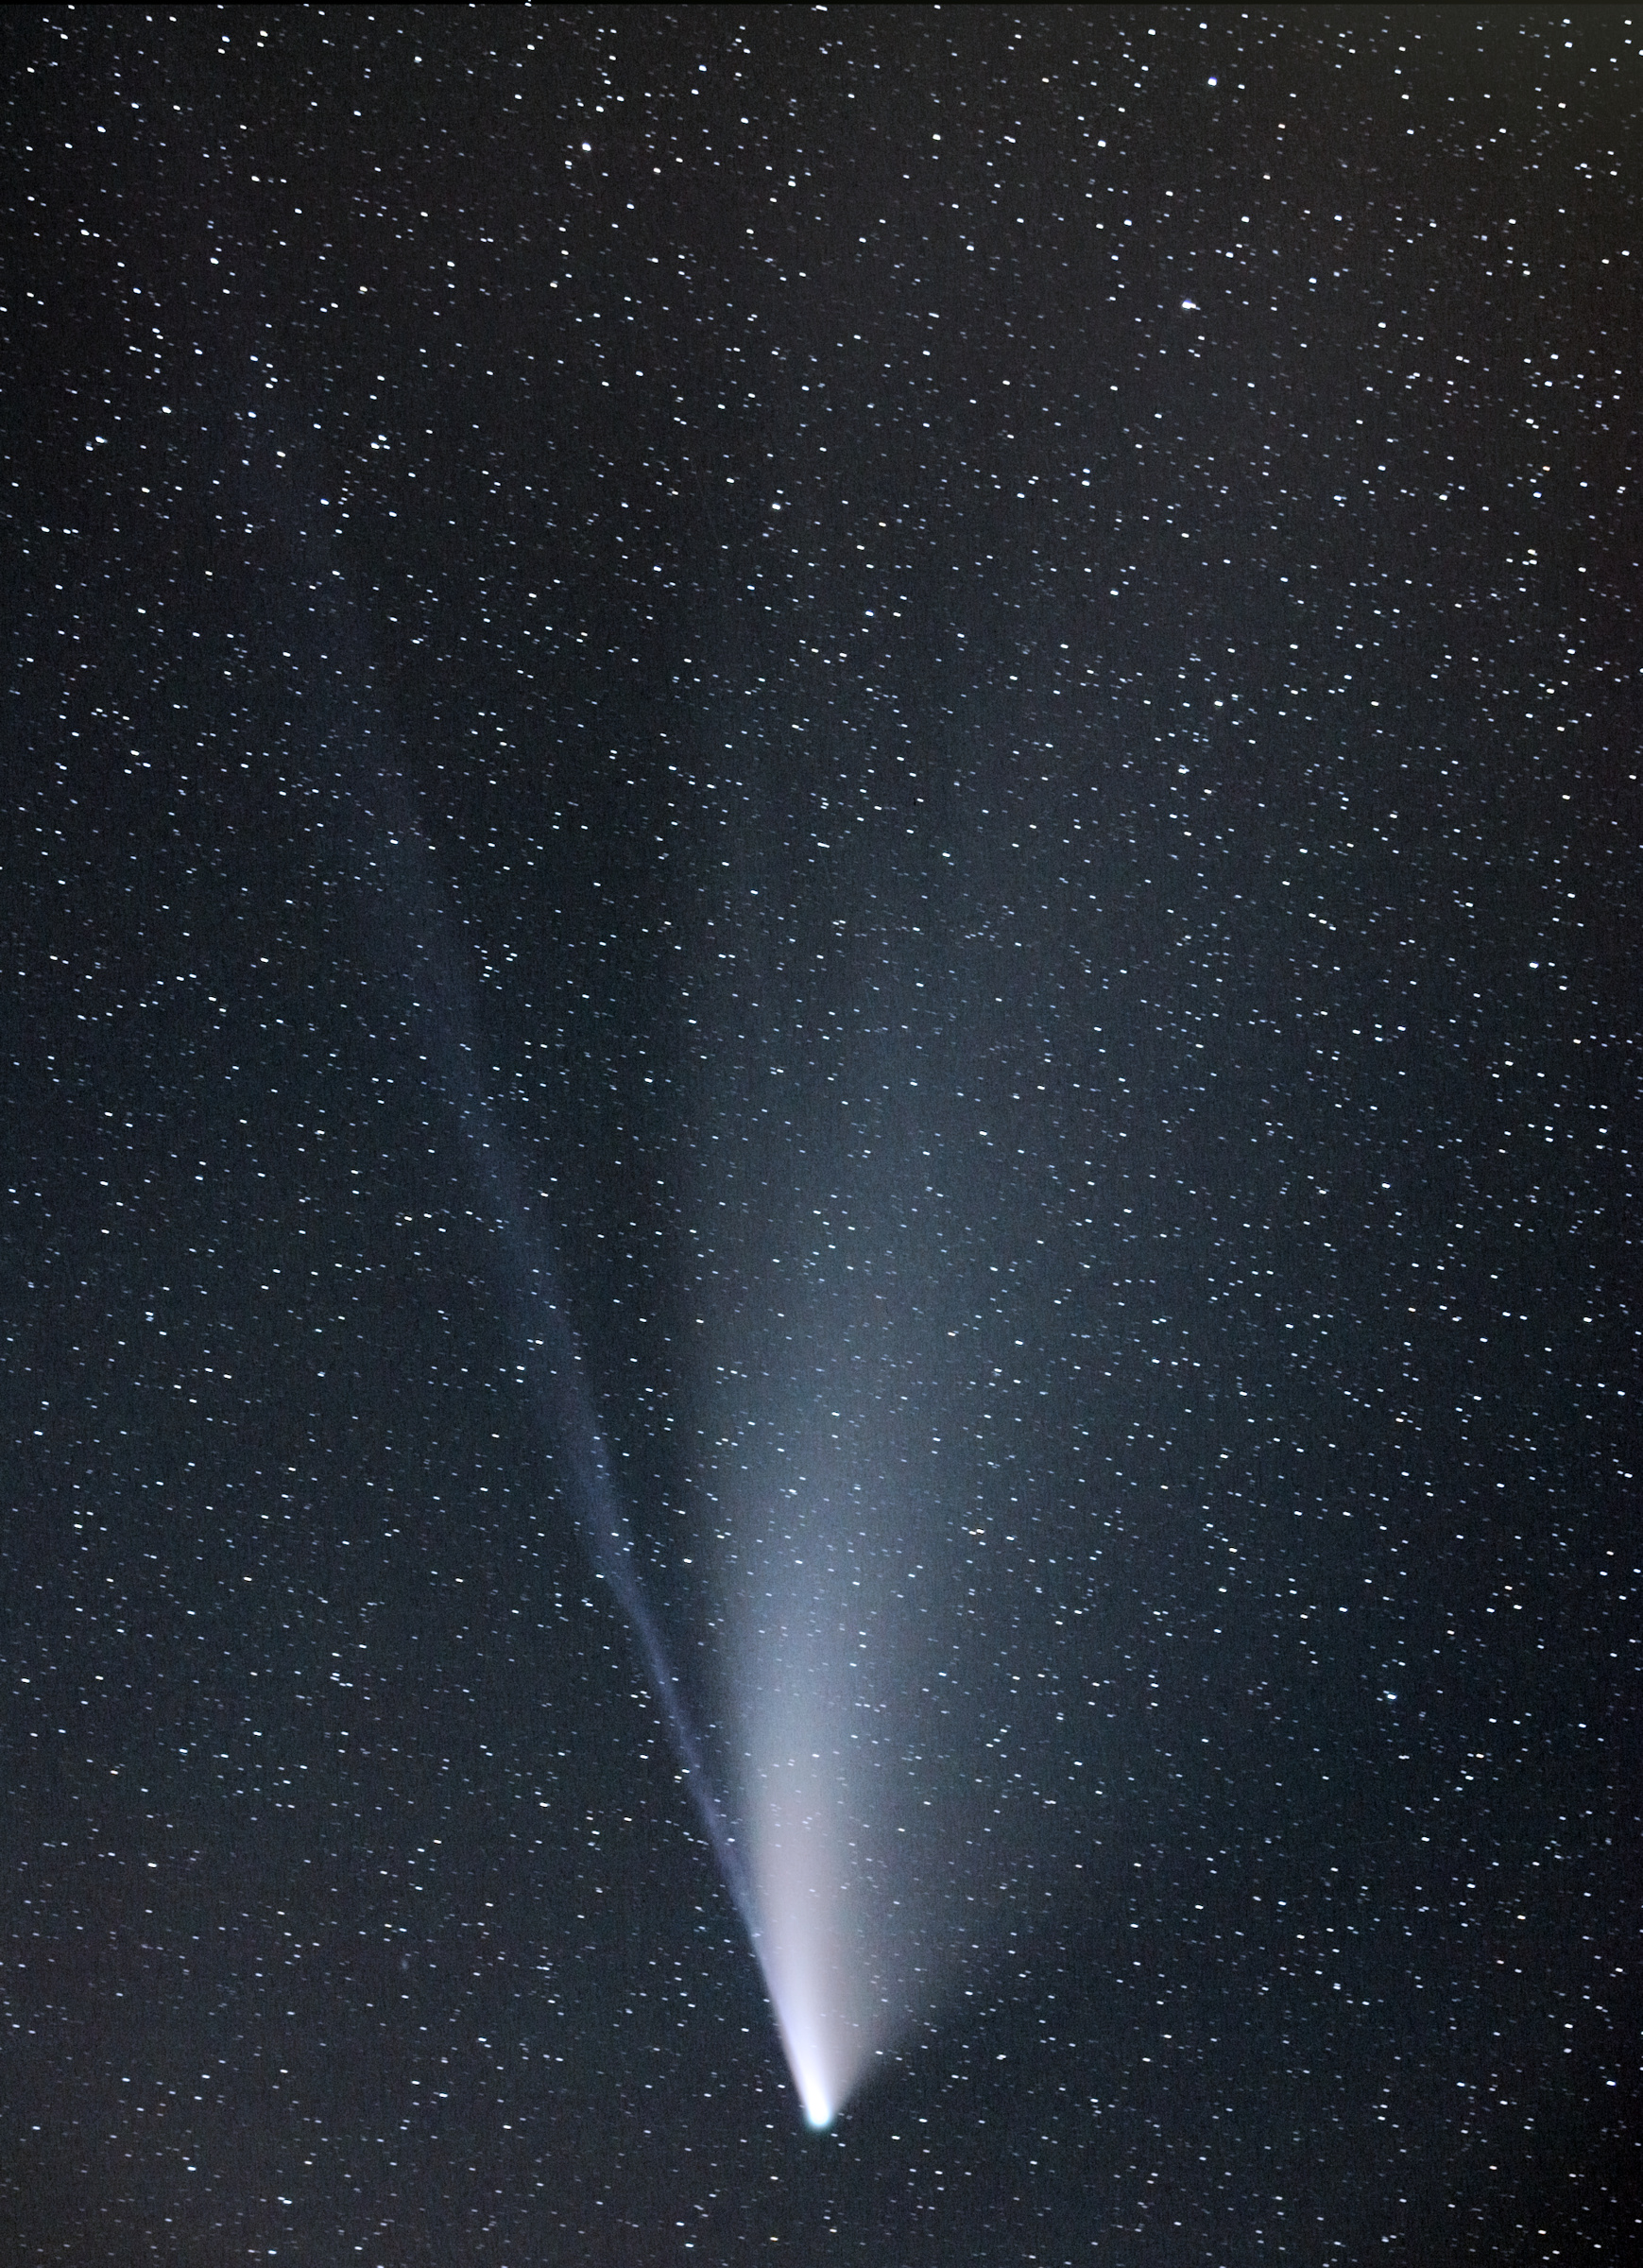 Kometen: IJsballen in ons zonnestelsel